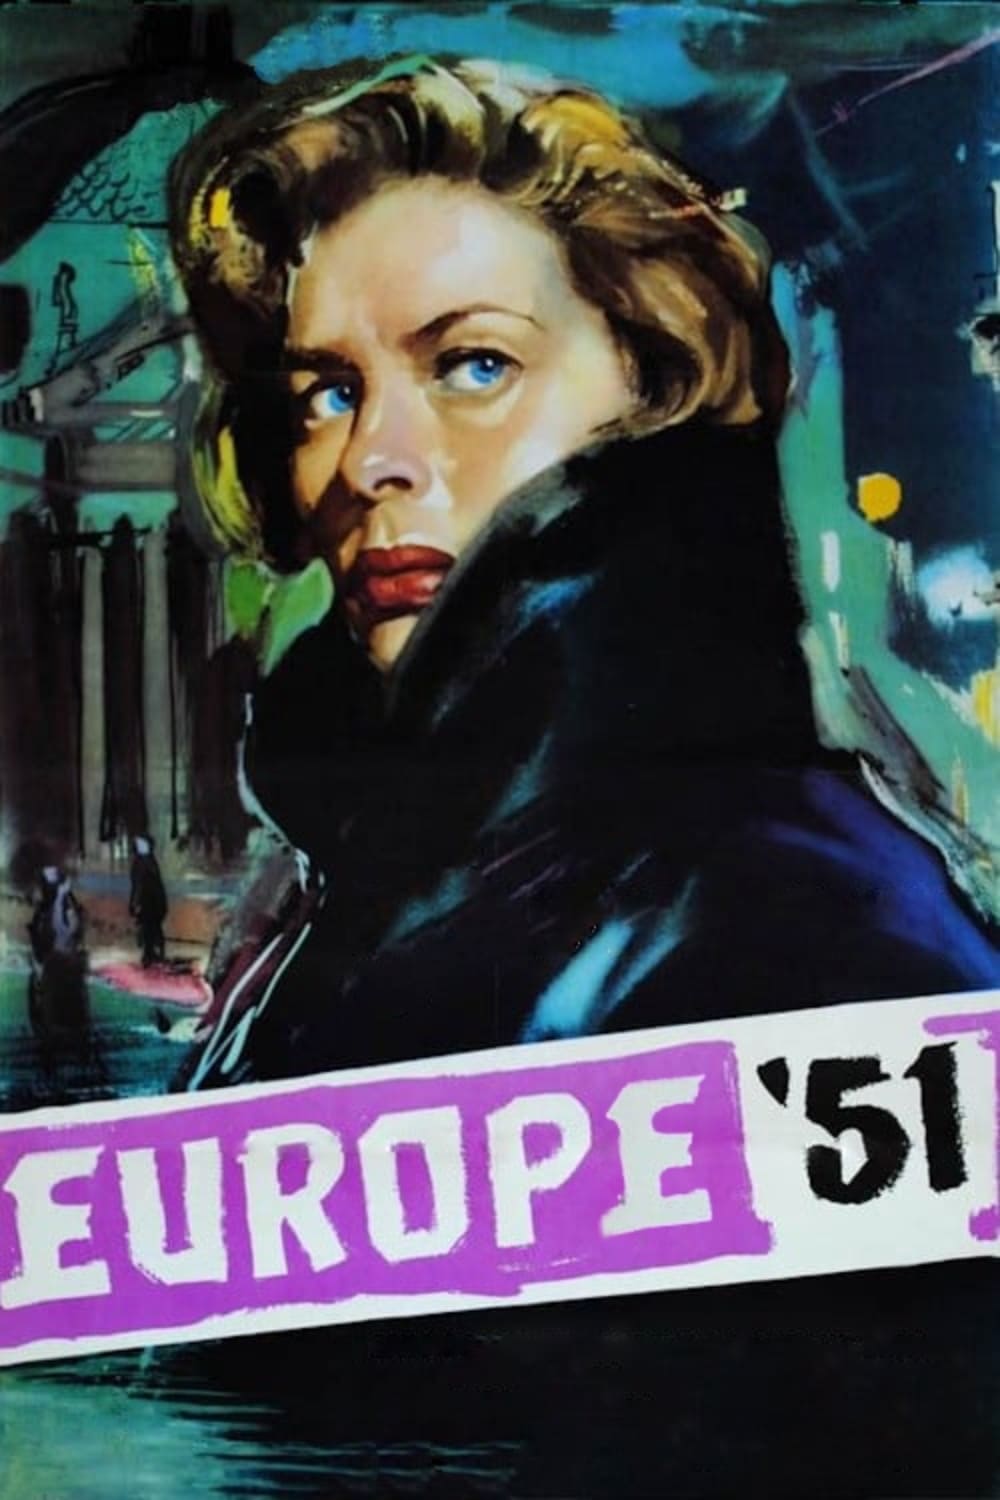 Europa 51 (1952)